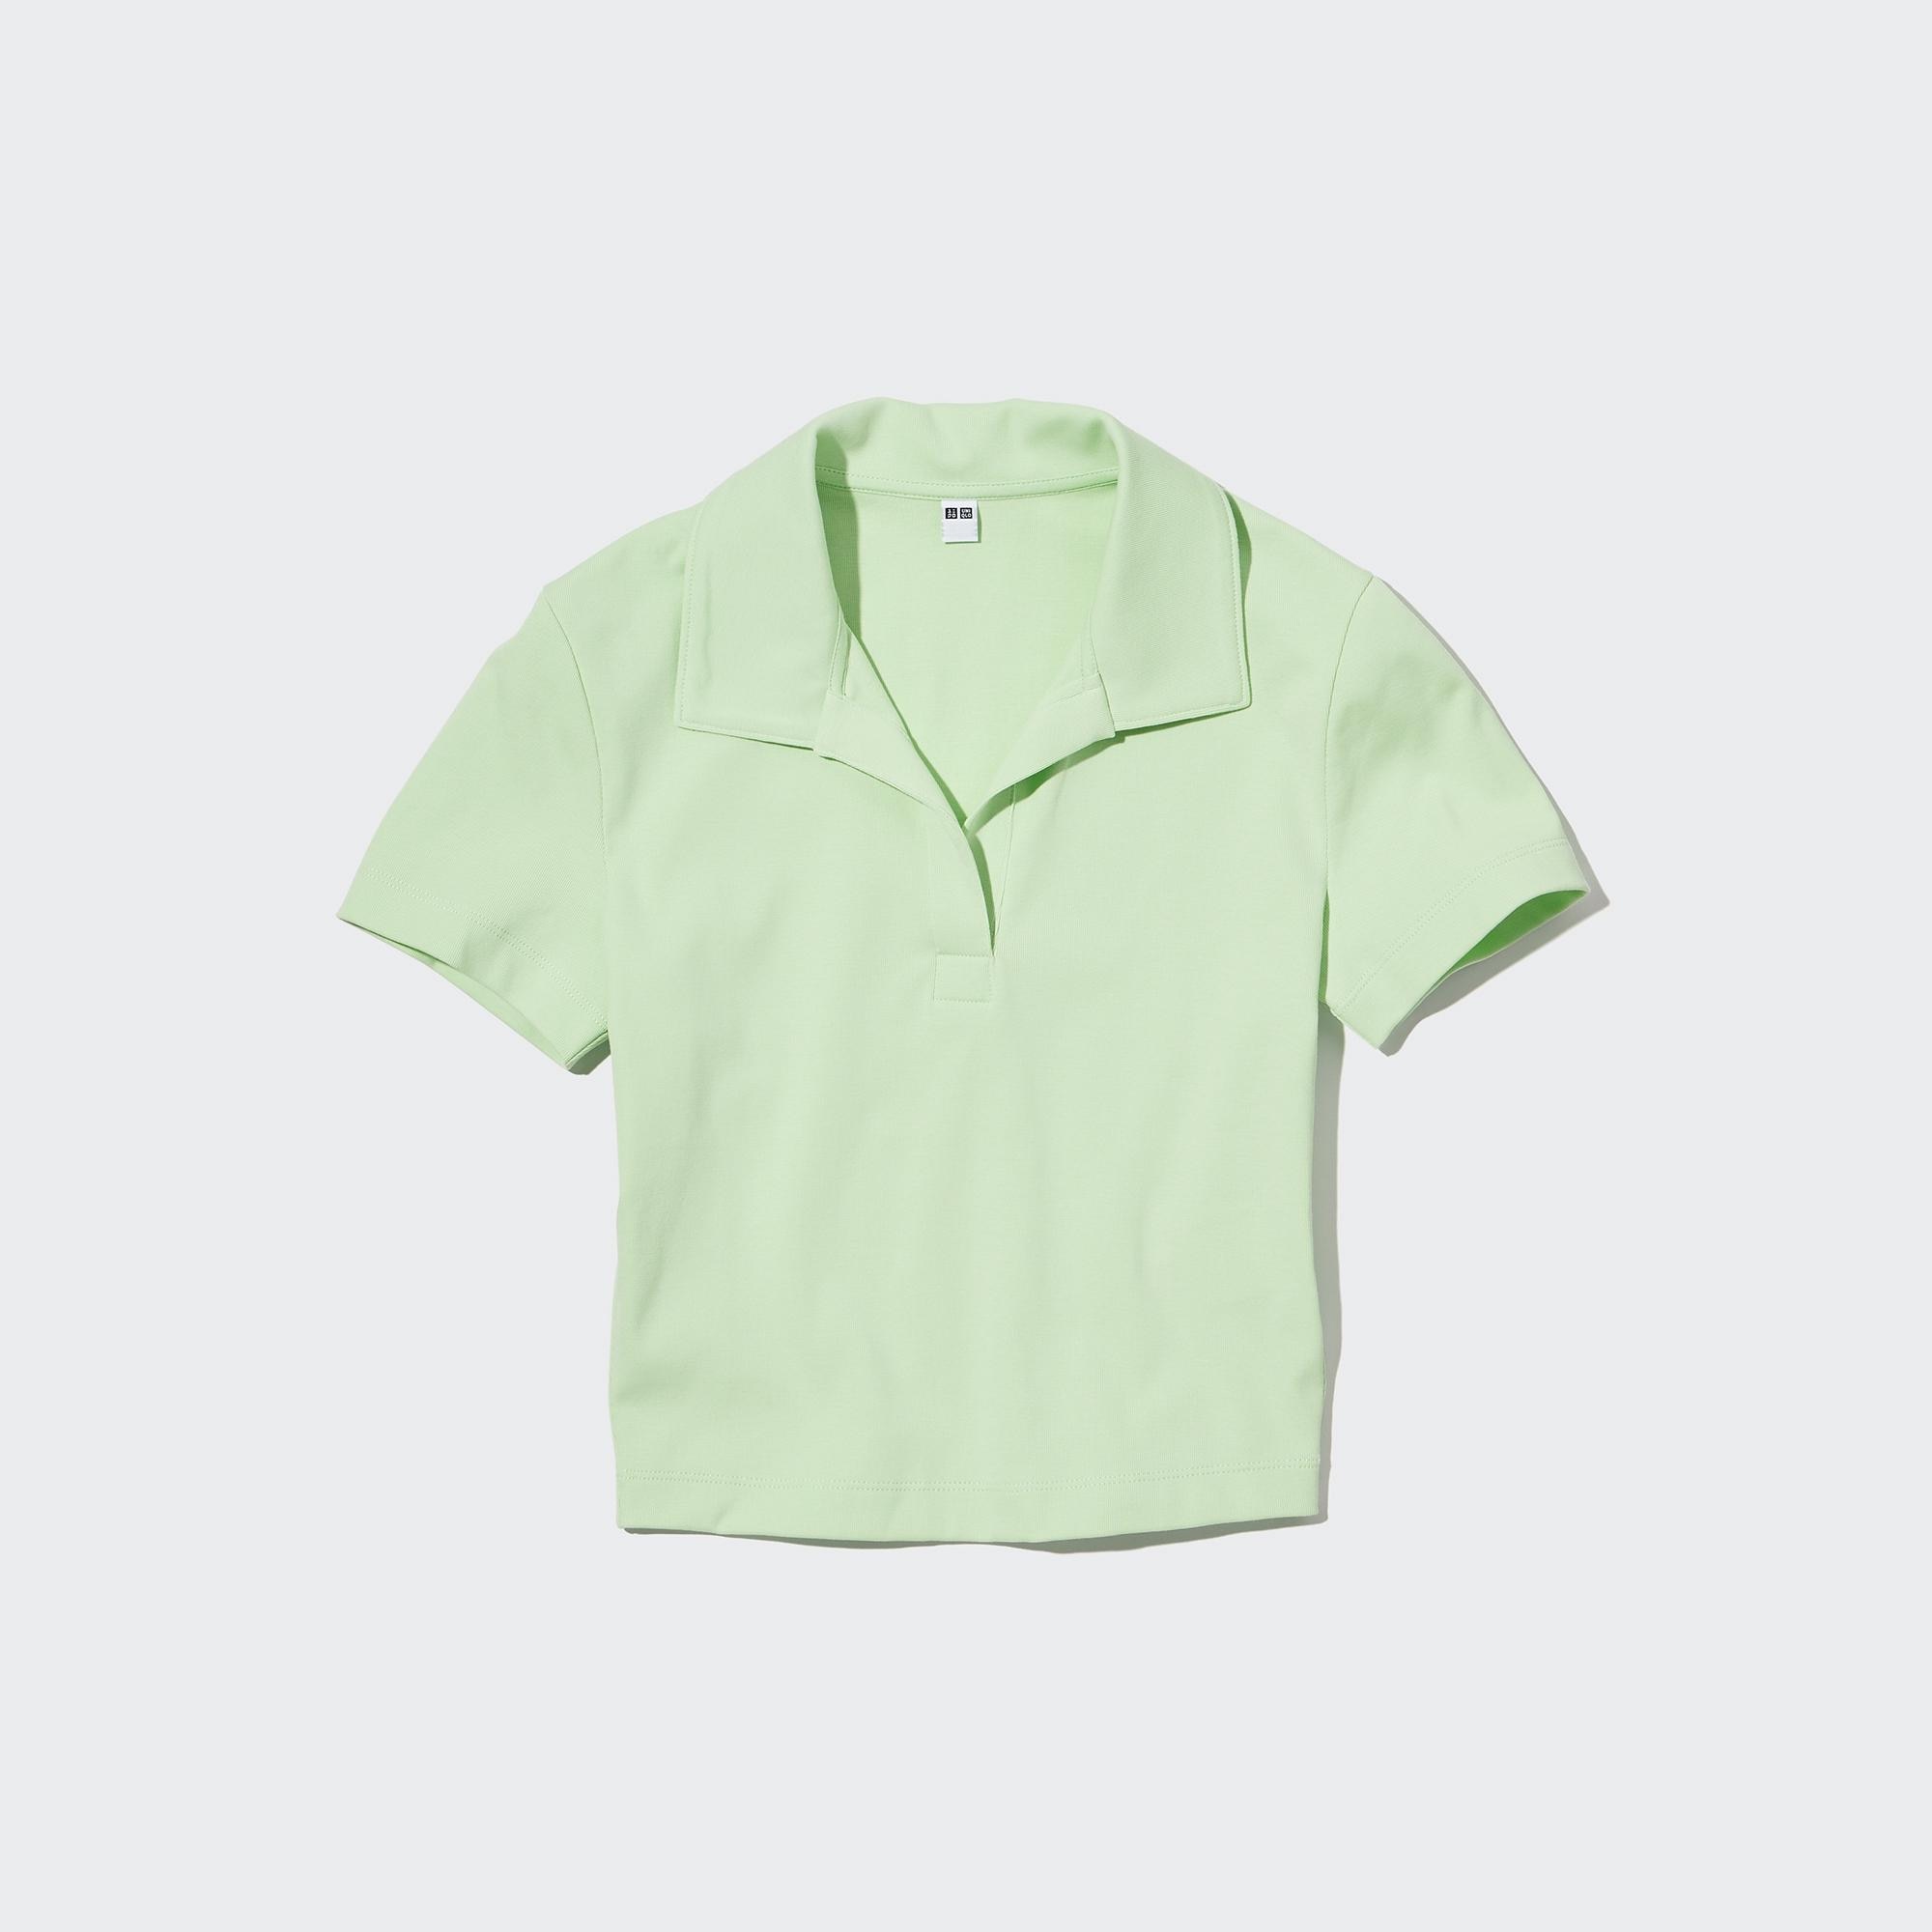 Uniqlo Singapore  MEN Dry Pique Short Sleeve Polo Shirt 1990 UP  2990 Shop now httpsuniqlocom2cUTWHF  Facebook